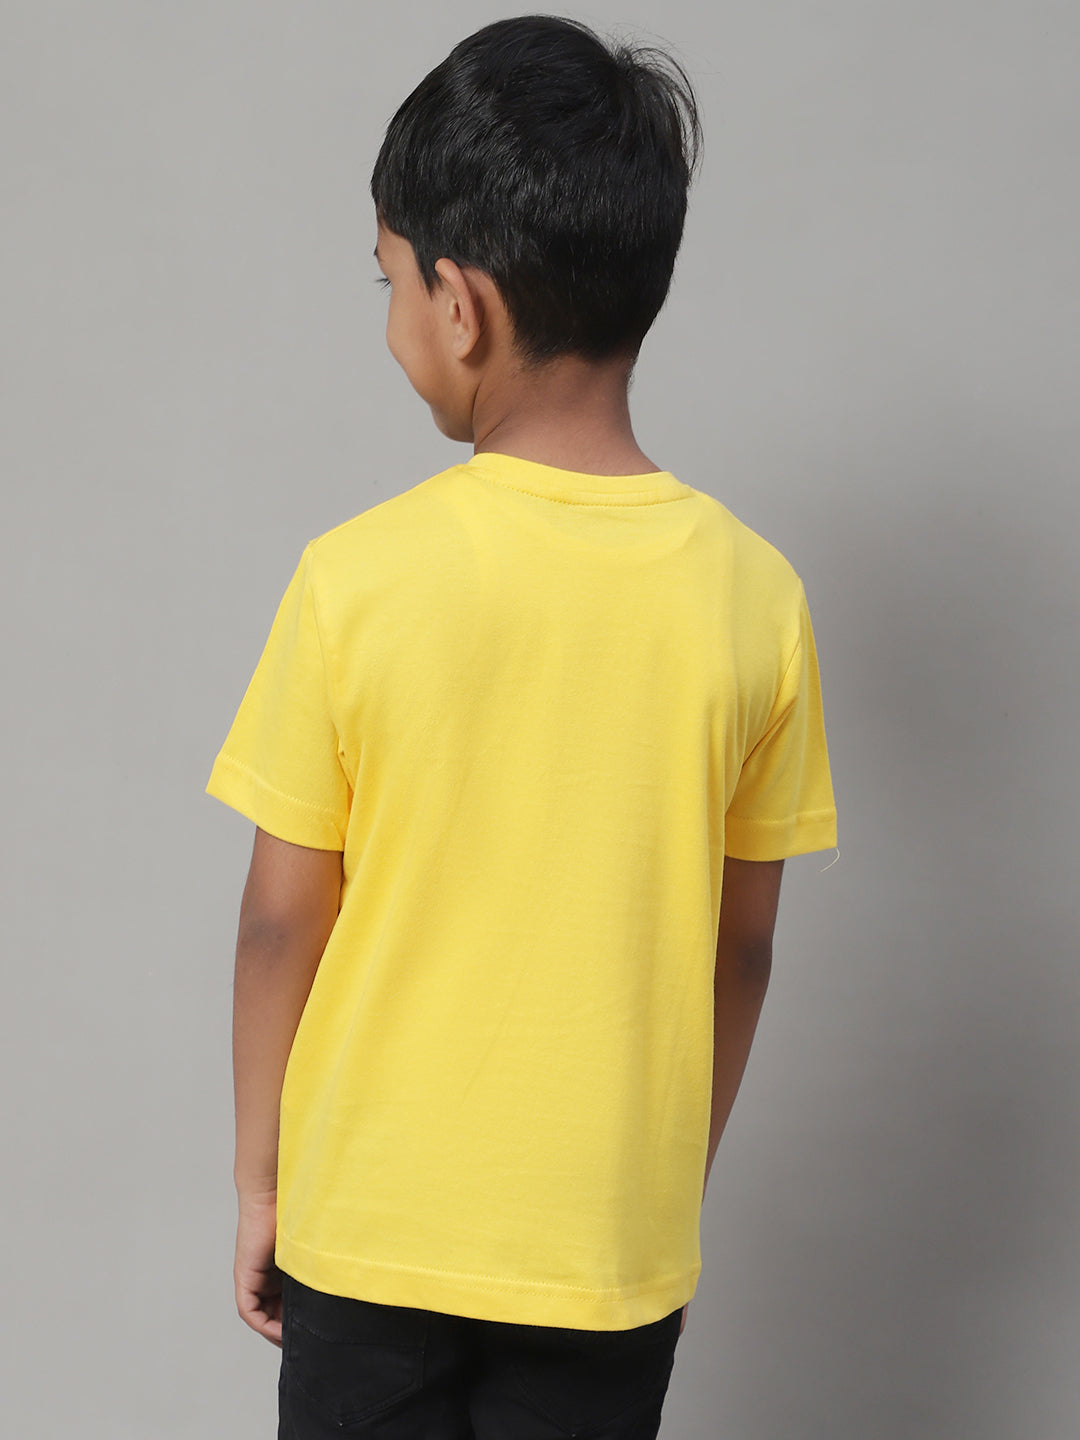 Boys Lets Half Sleeves Printed T-Shirt - Friskers